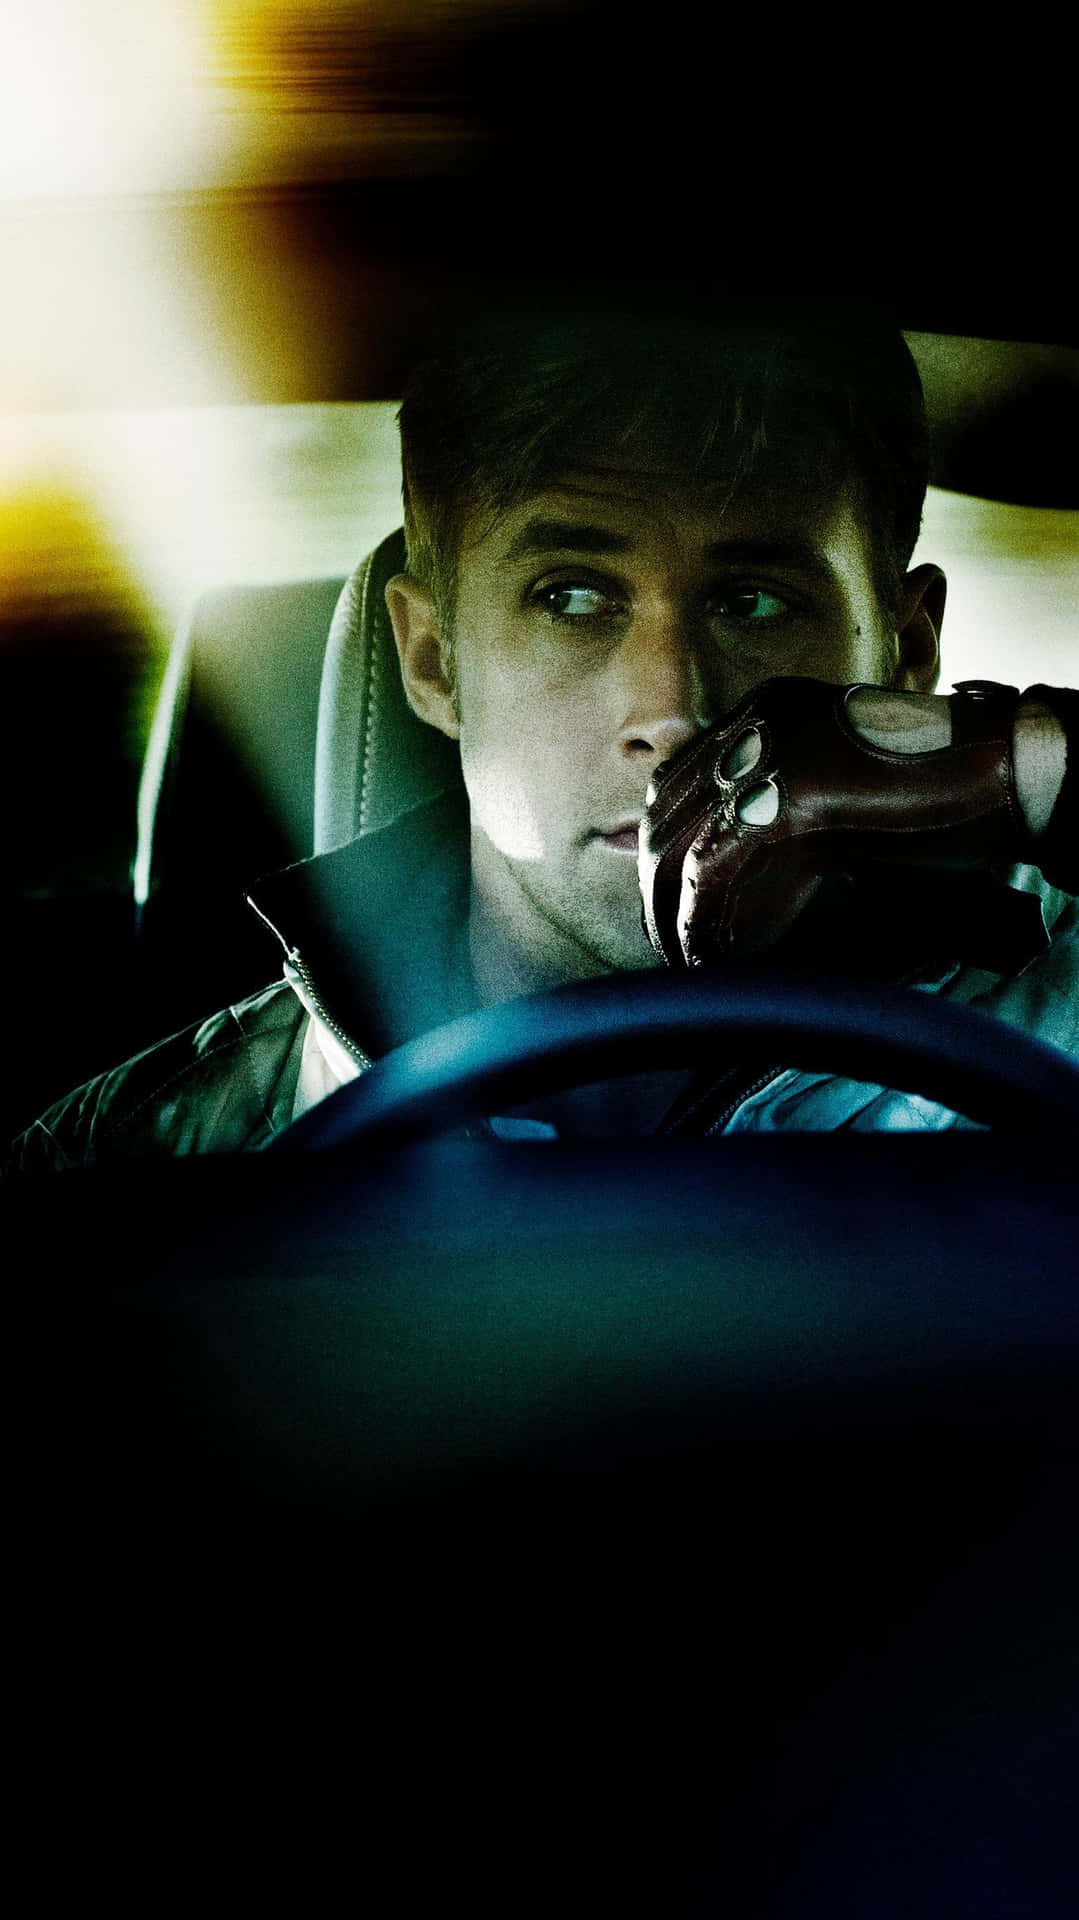 Intense Driver Portrait Nighttime Wallpaper